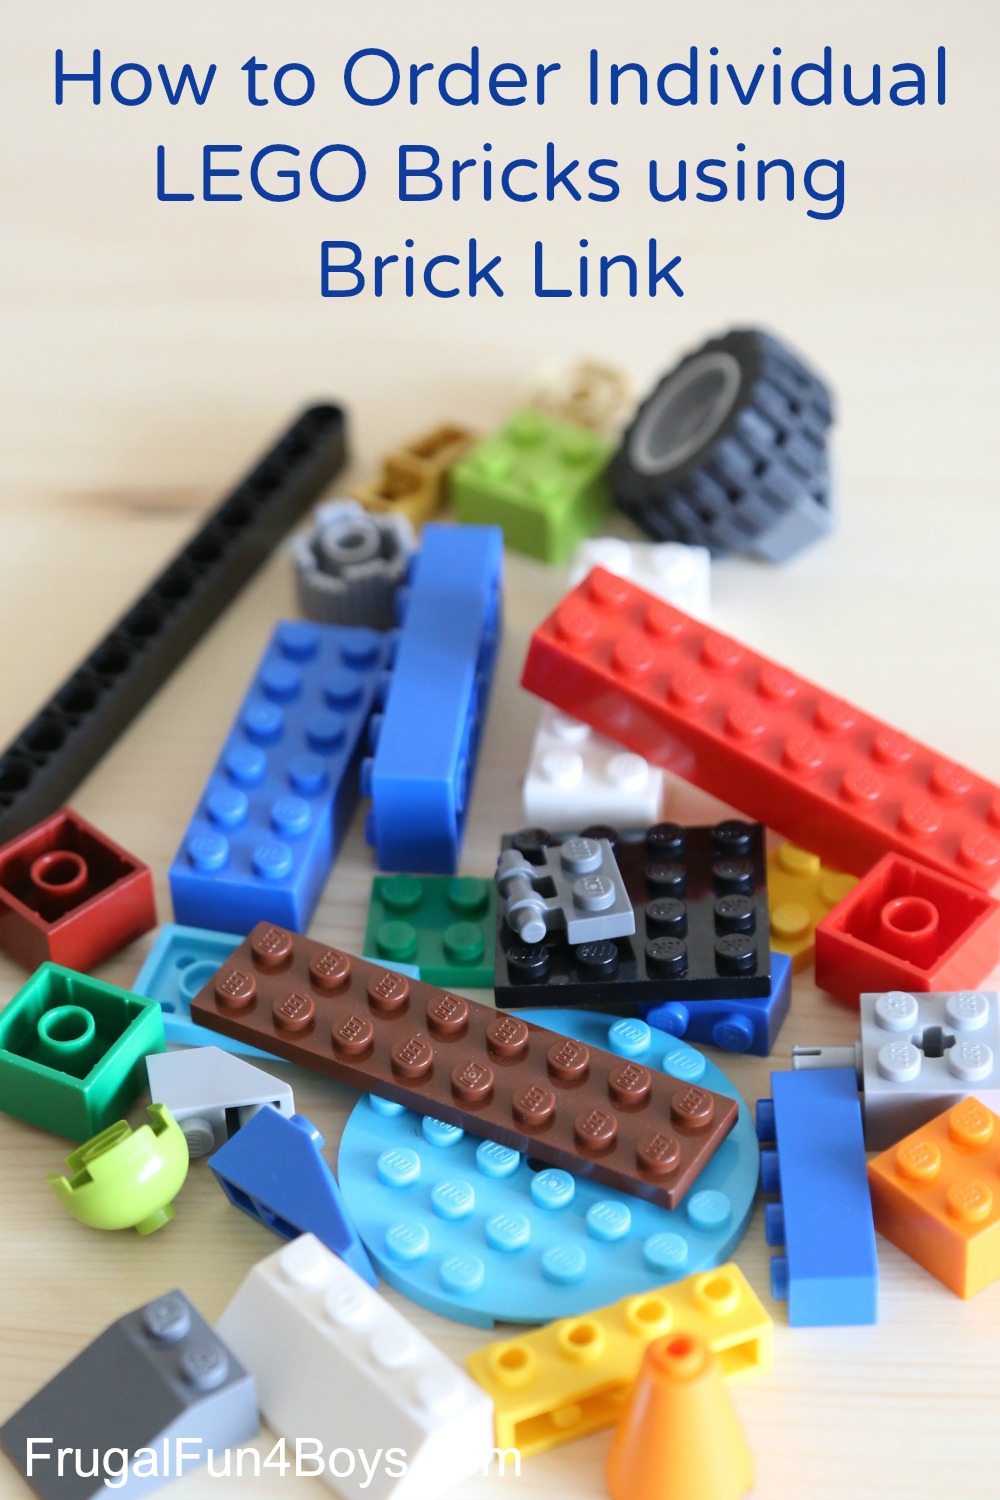 How to Order Individual LEGO Bricks on Brick Link